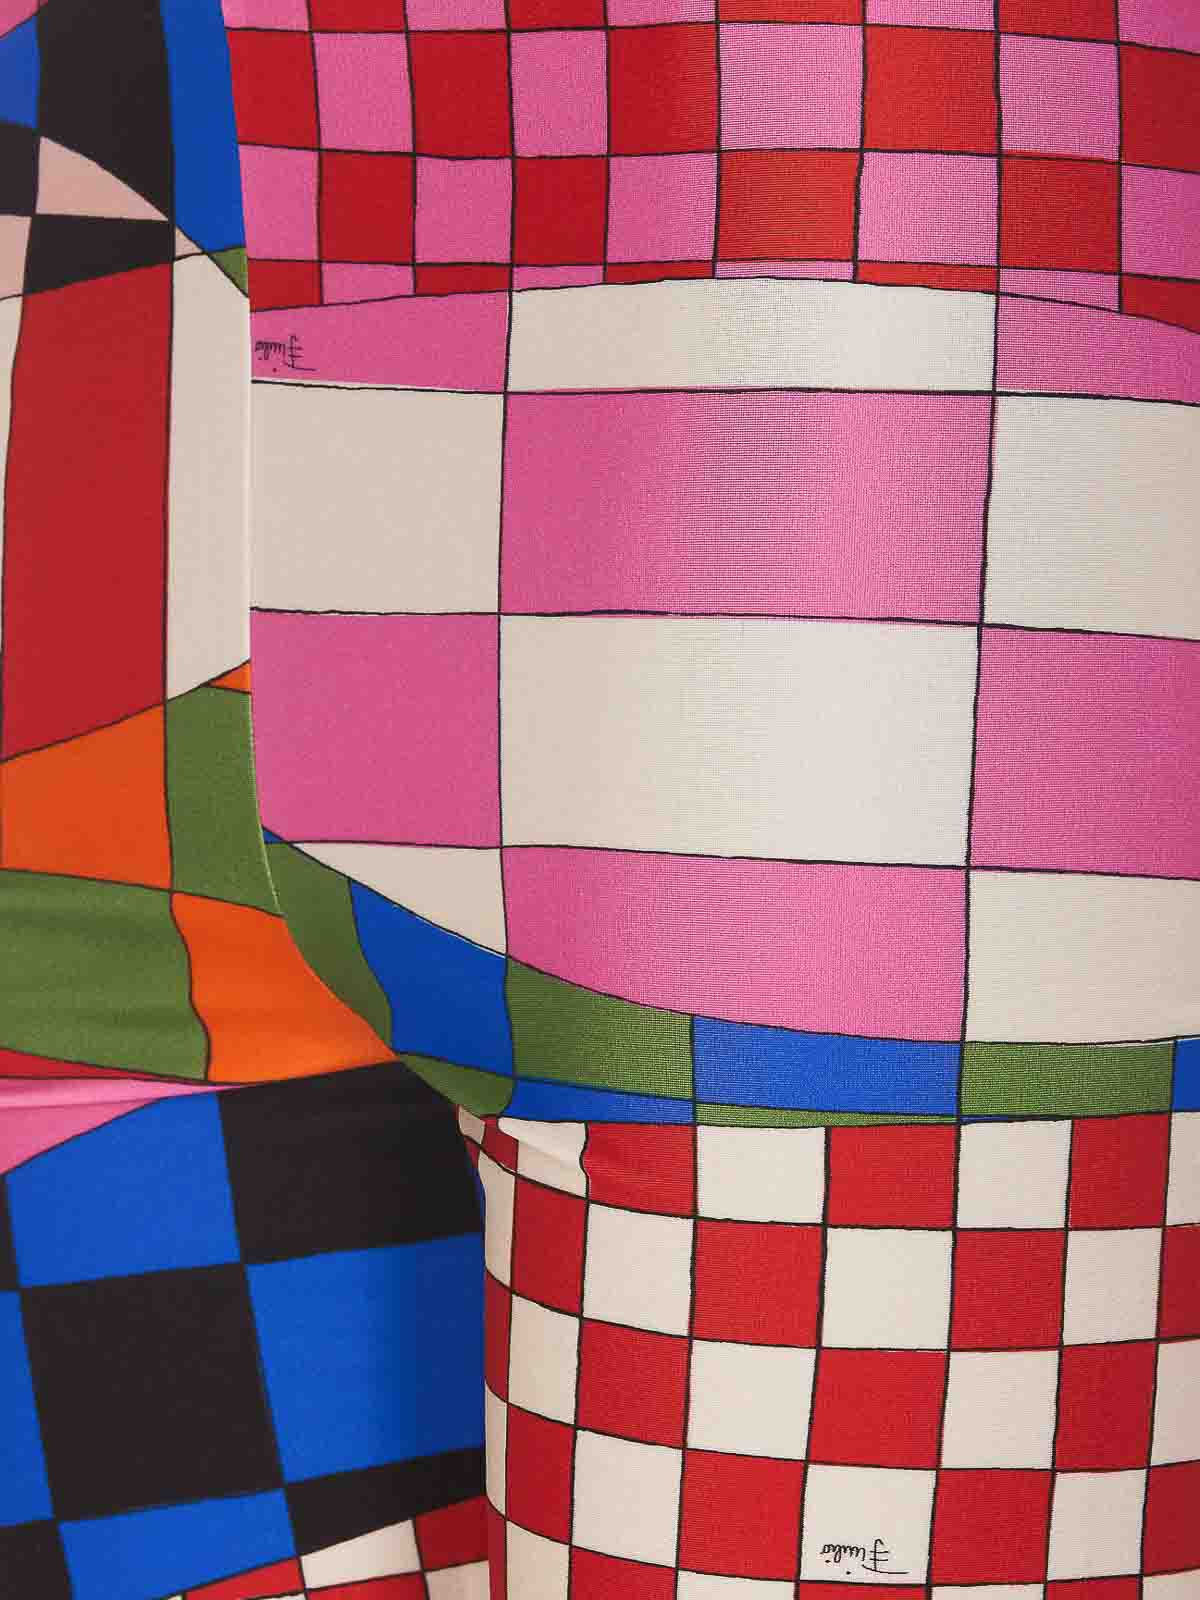 Printed tights in multicoloured - Pucci